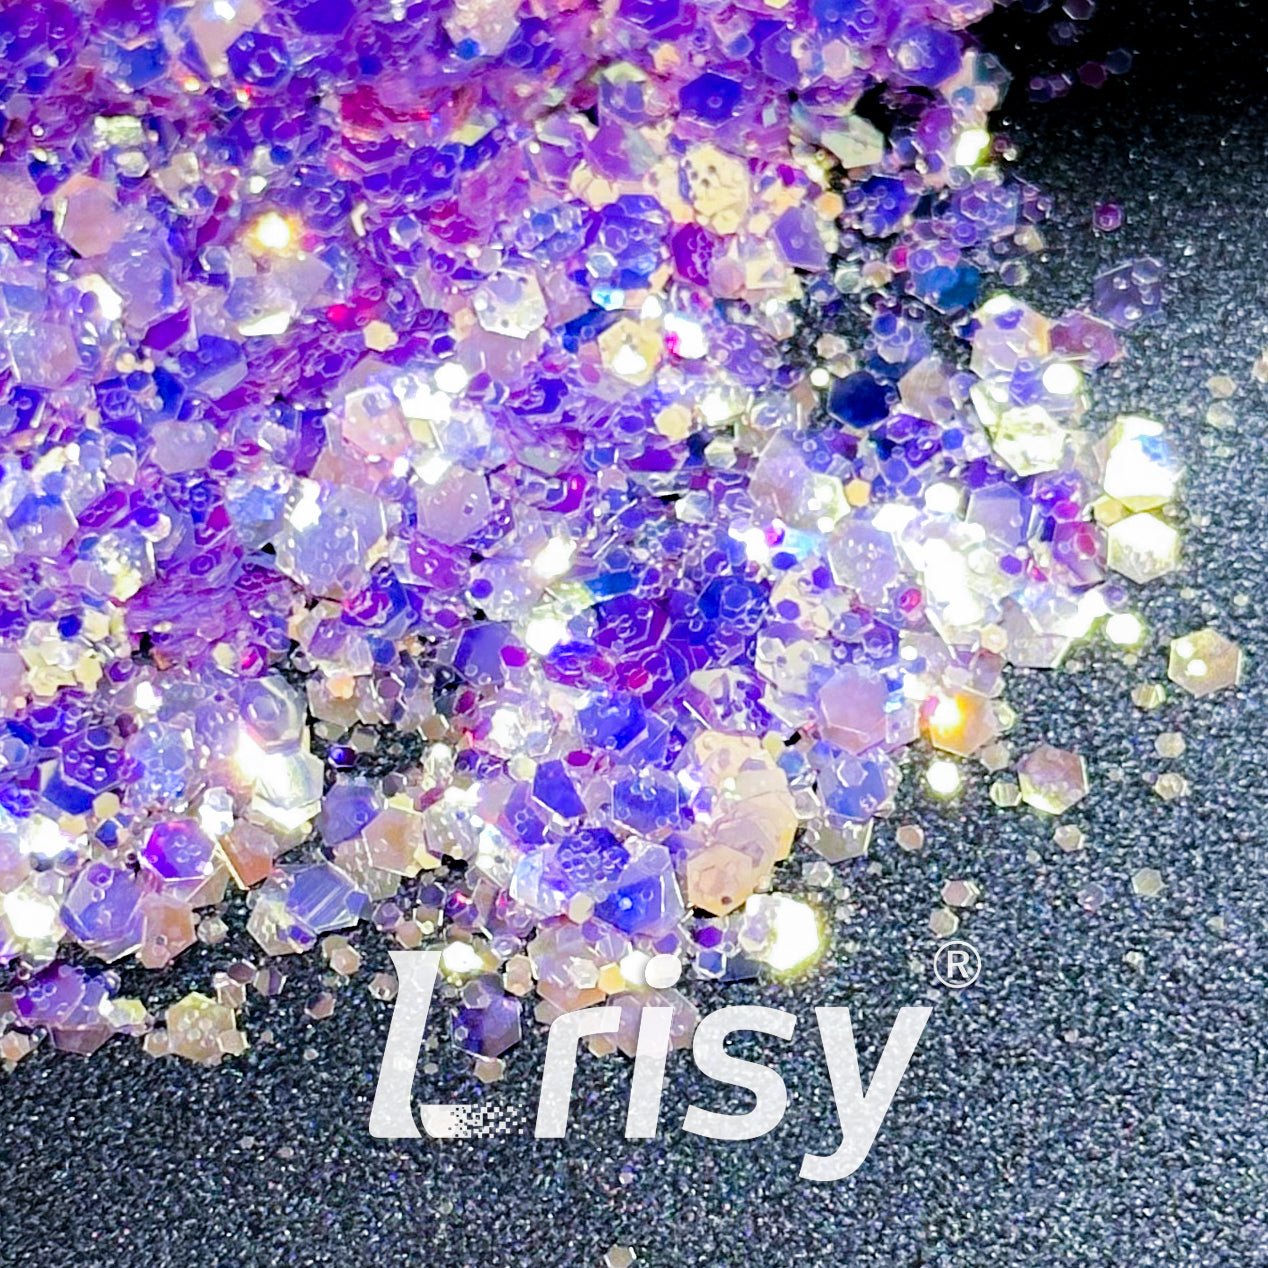 General Mixed High Brightness Iridescent Purple Glitter HB809